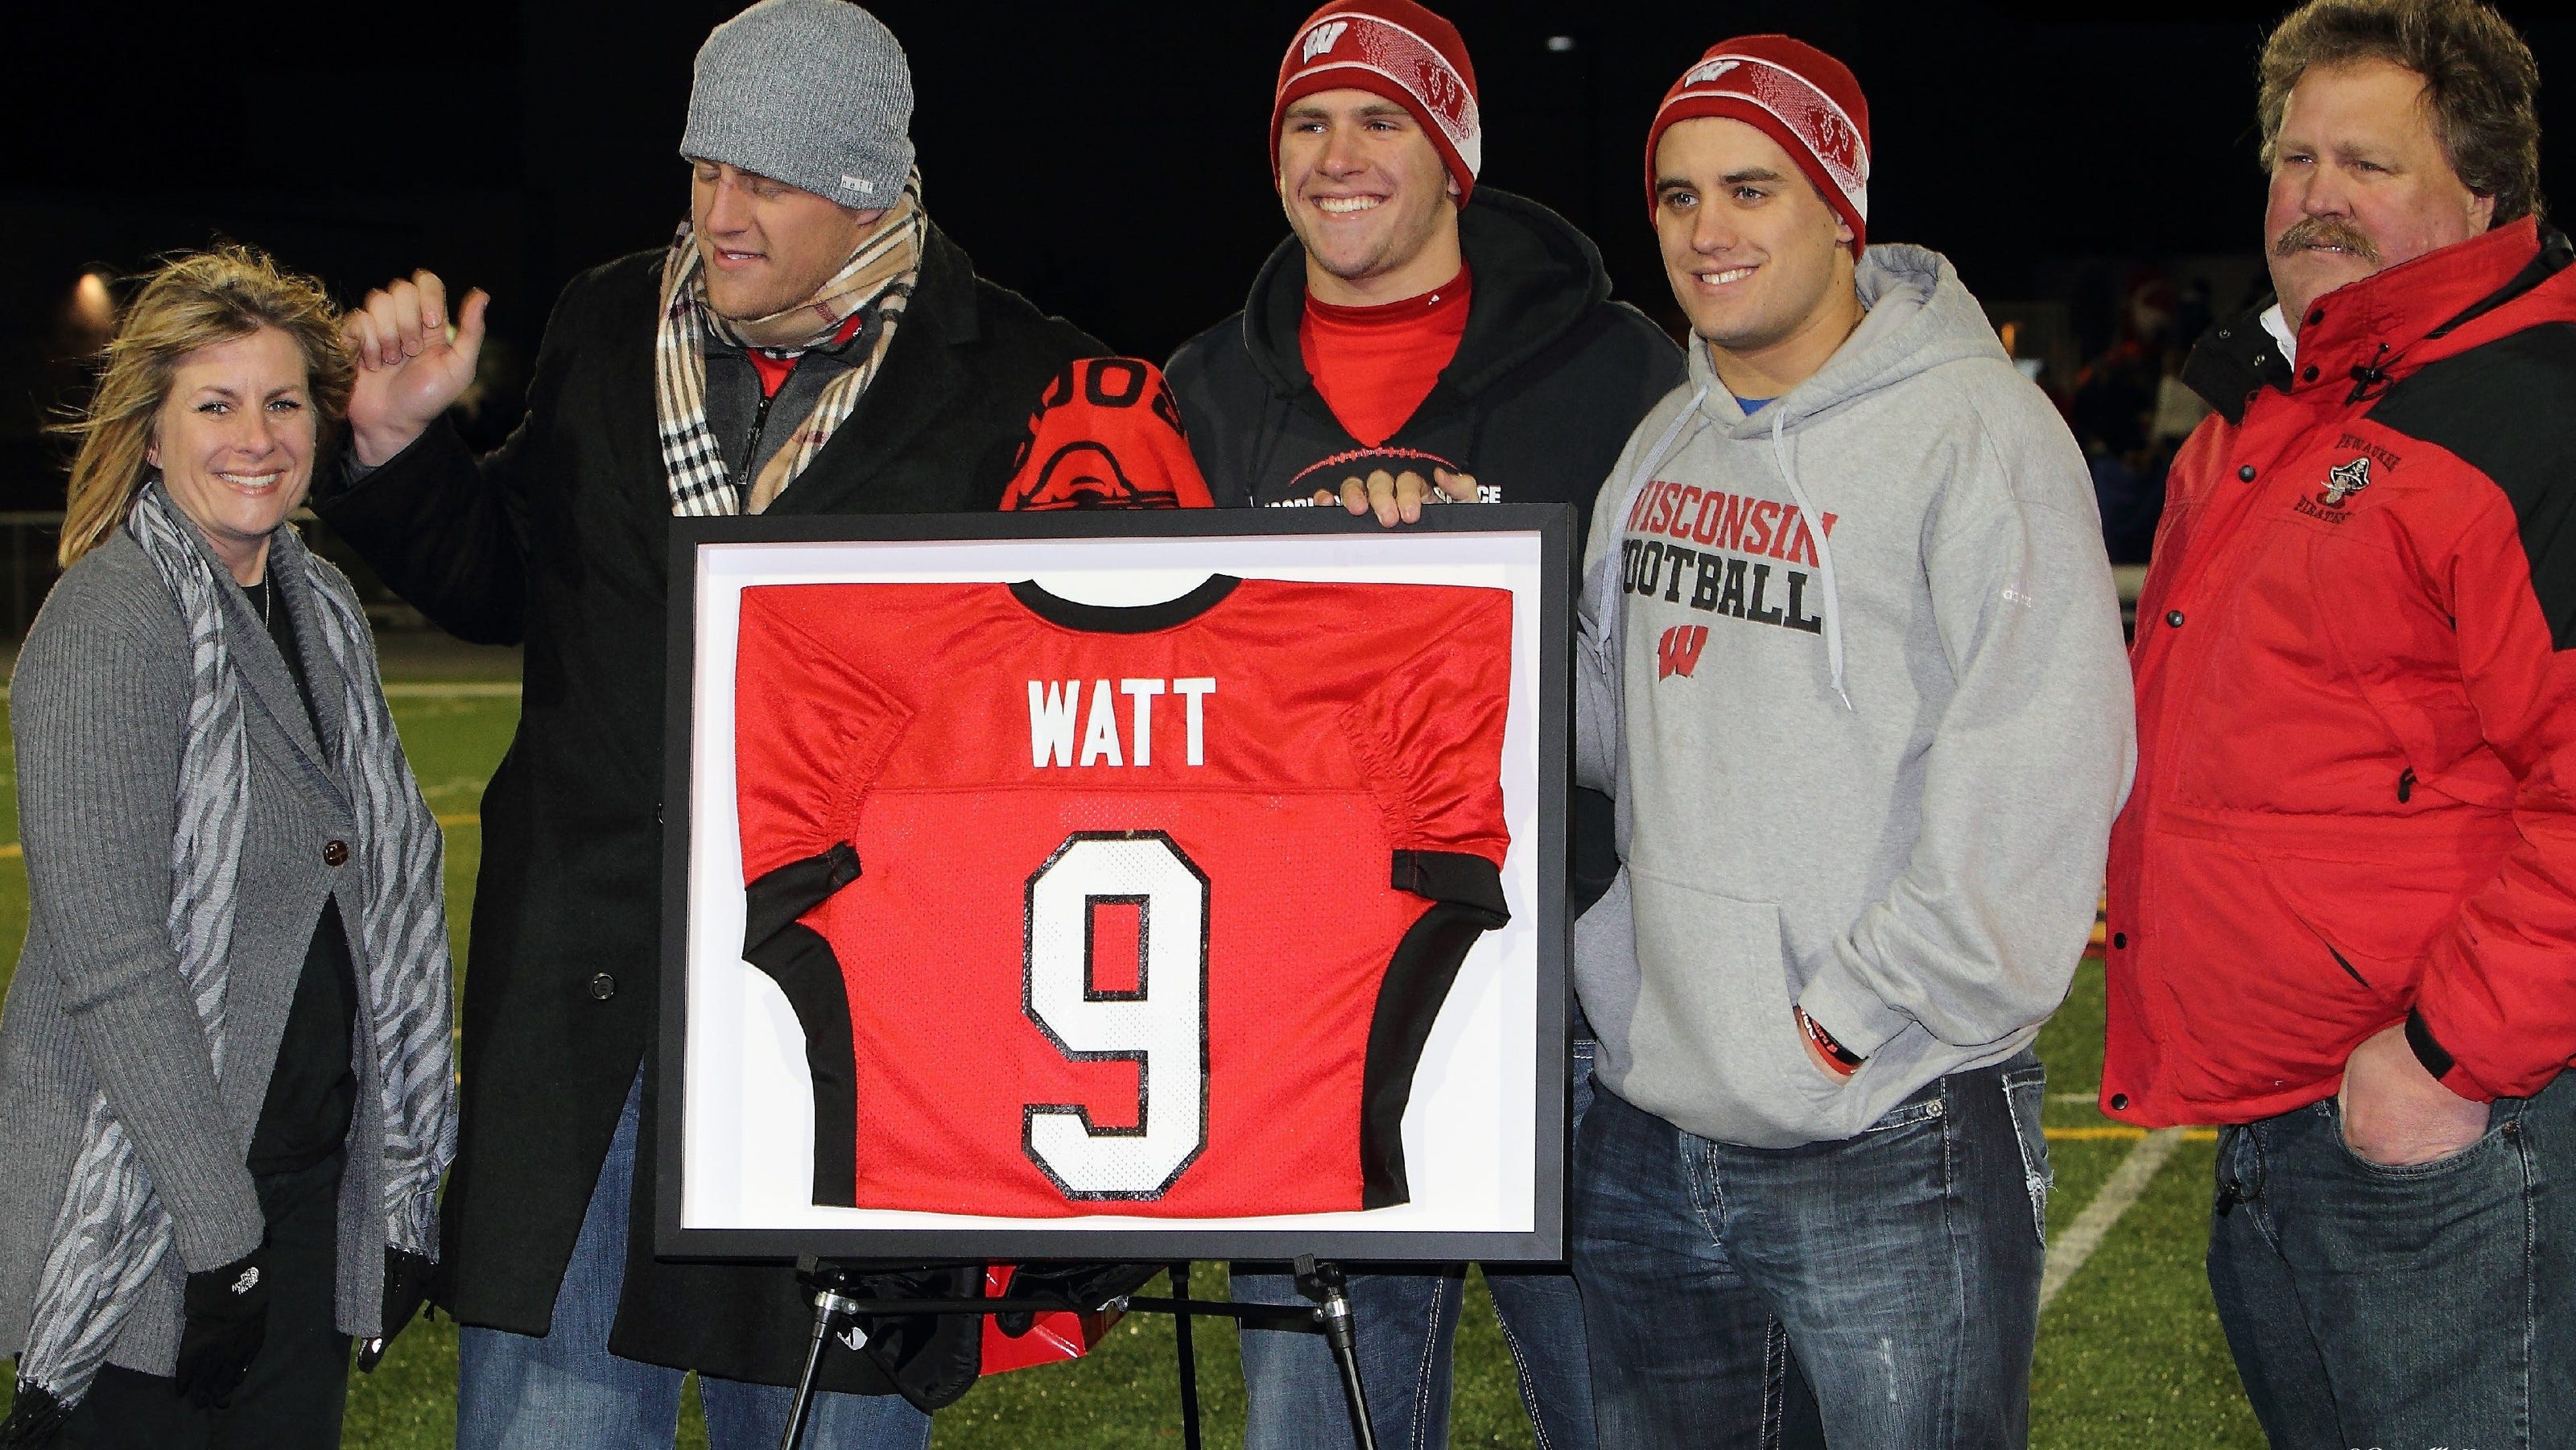 Three Watt brothers appearing in same NFL game, Texans vs. Steelers